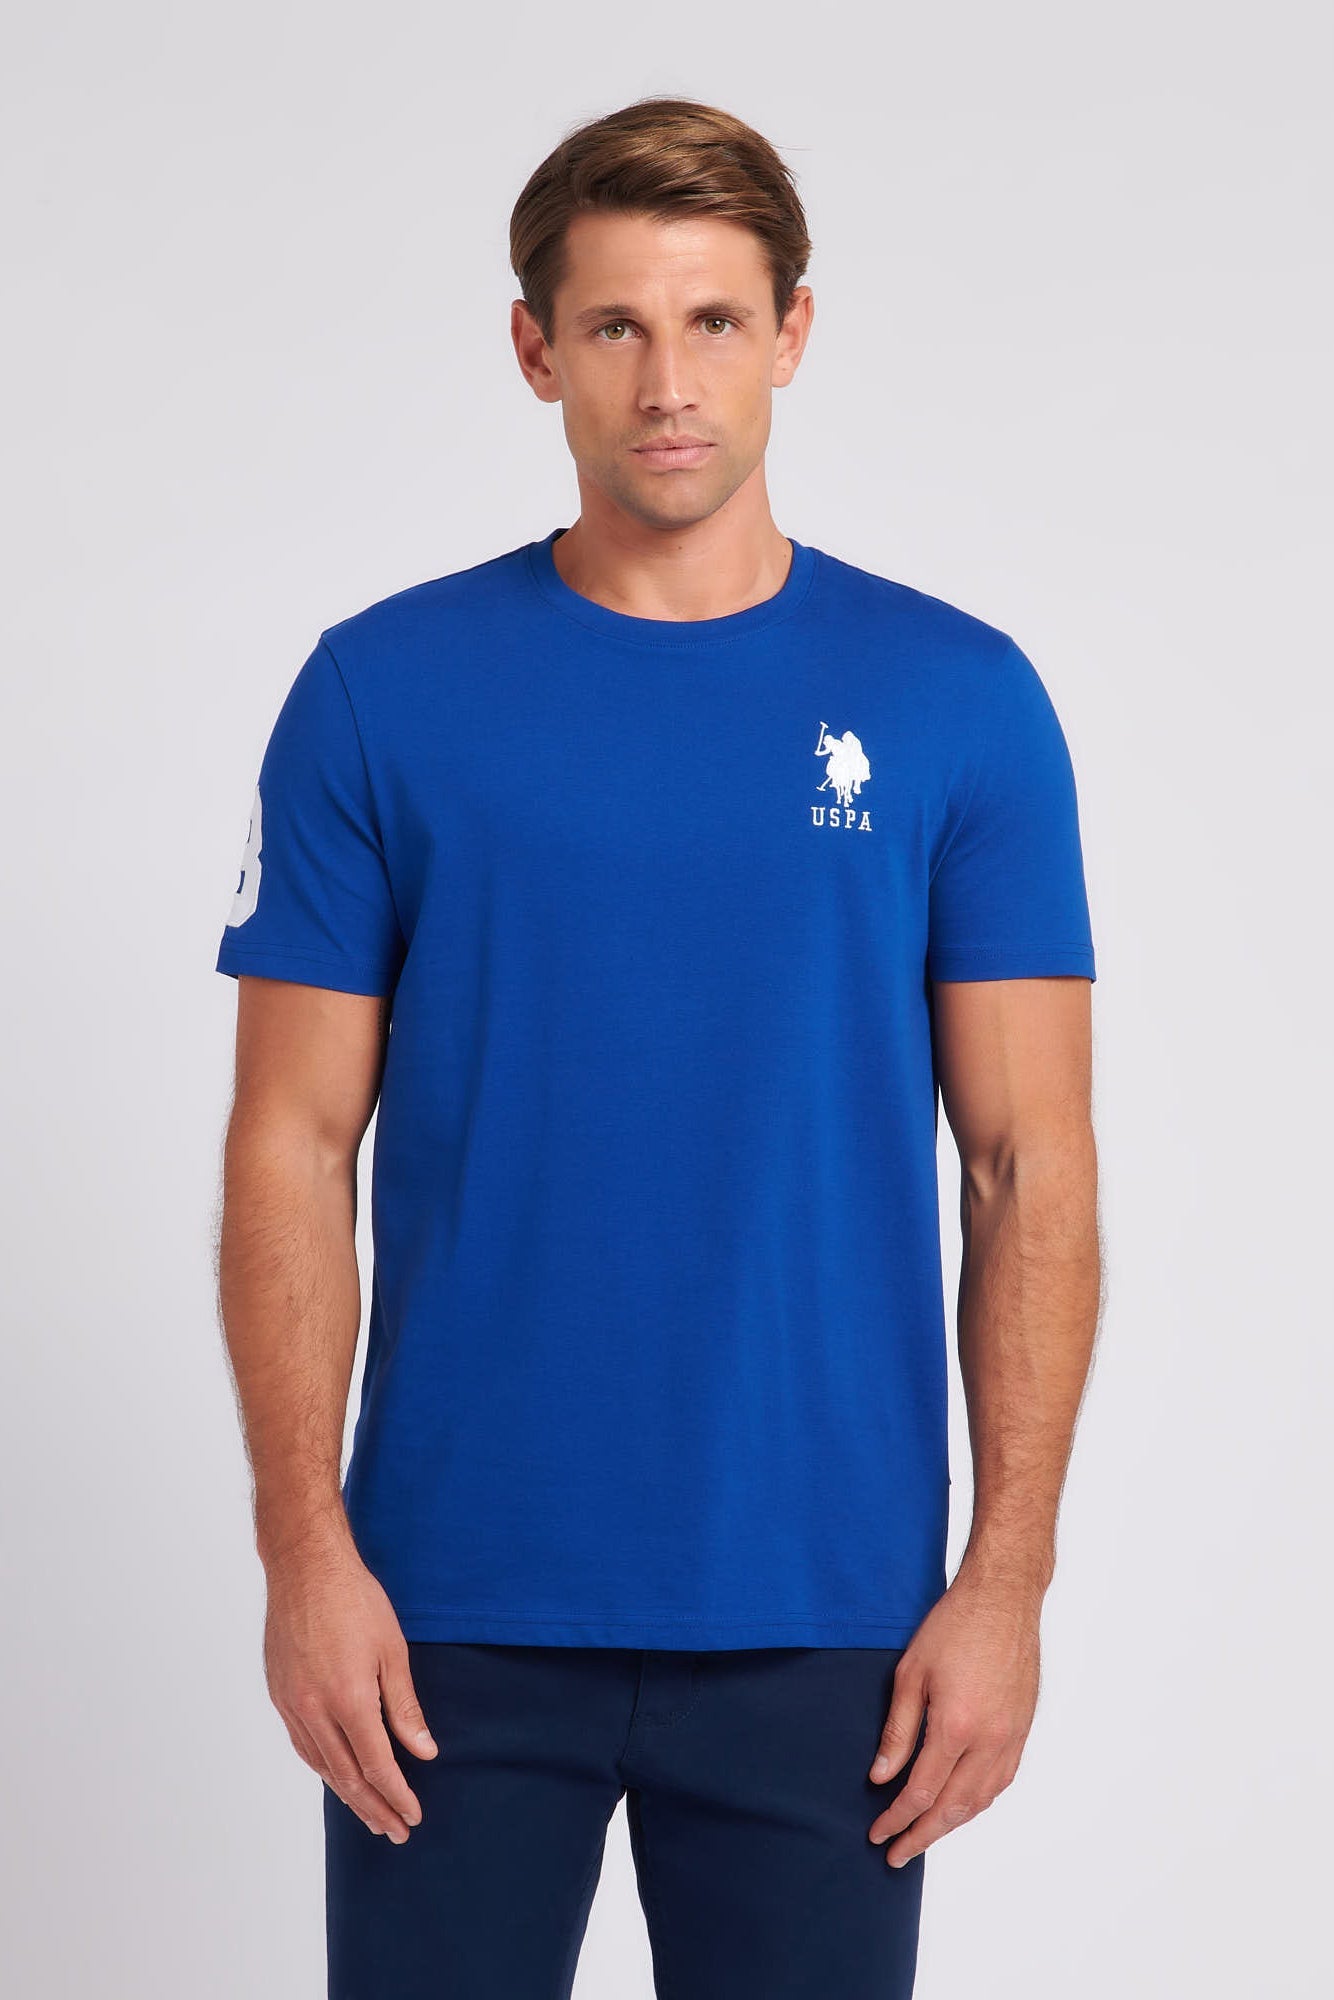 U.S. Polo Assn. Mens Player 3 T-Shirt in Sodalite Blue